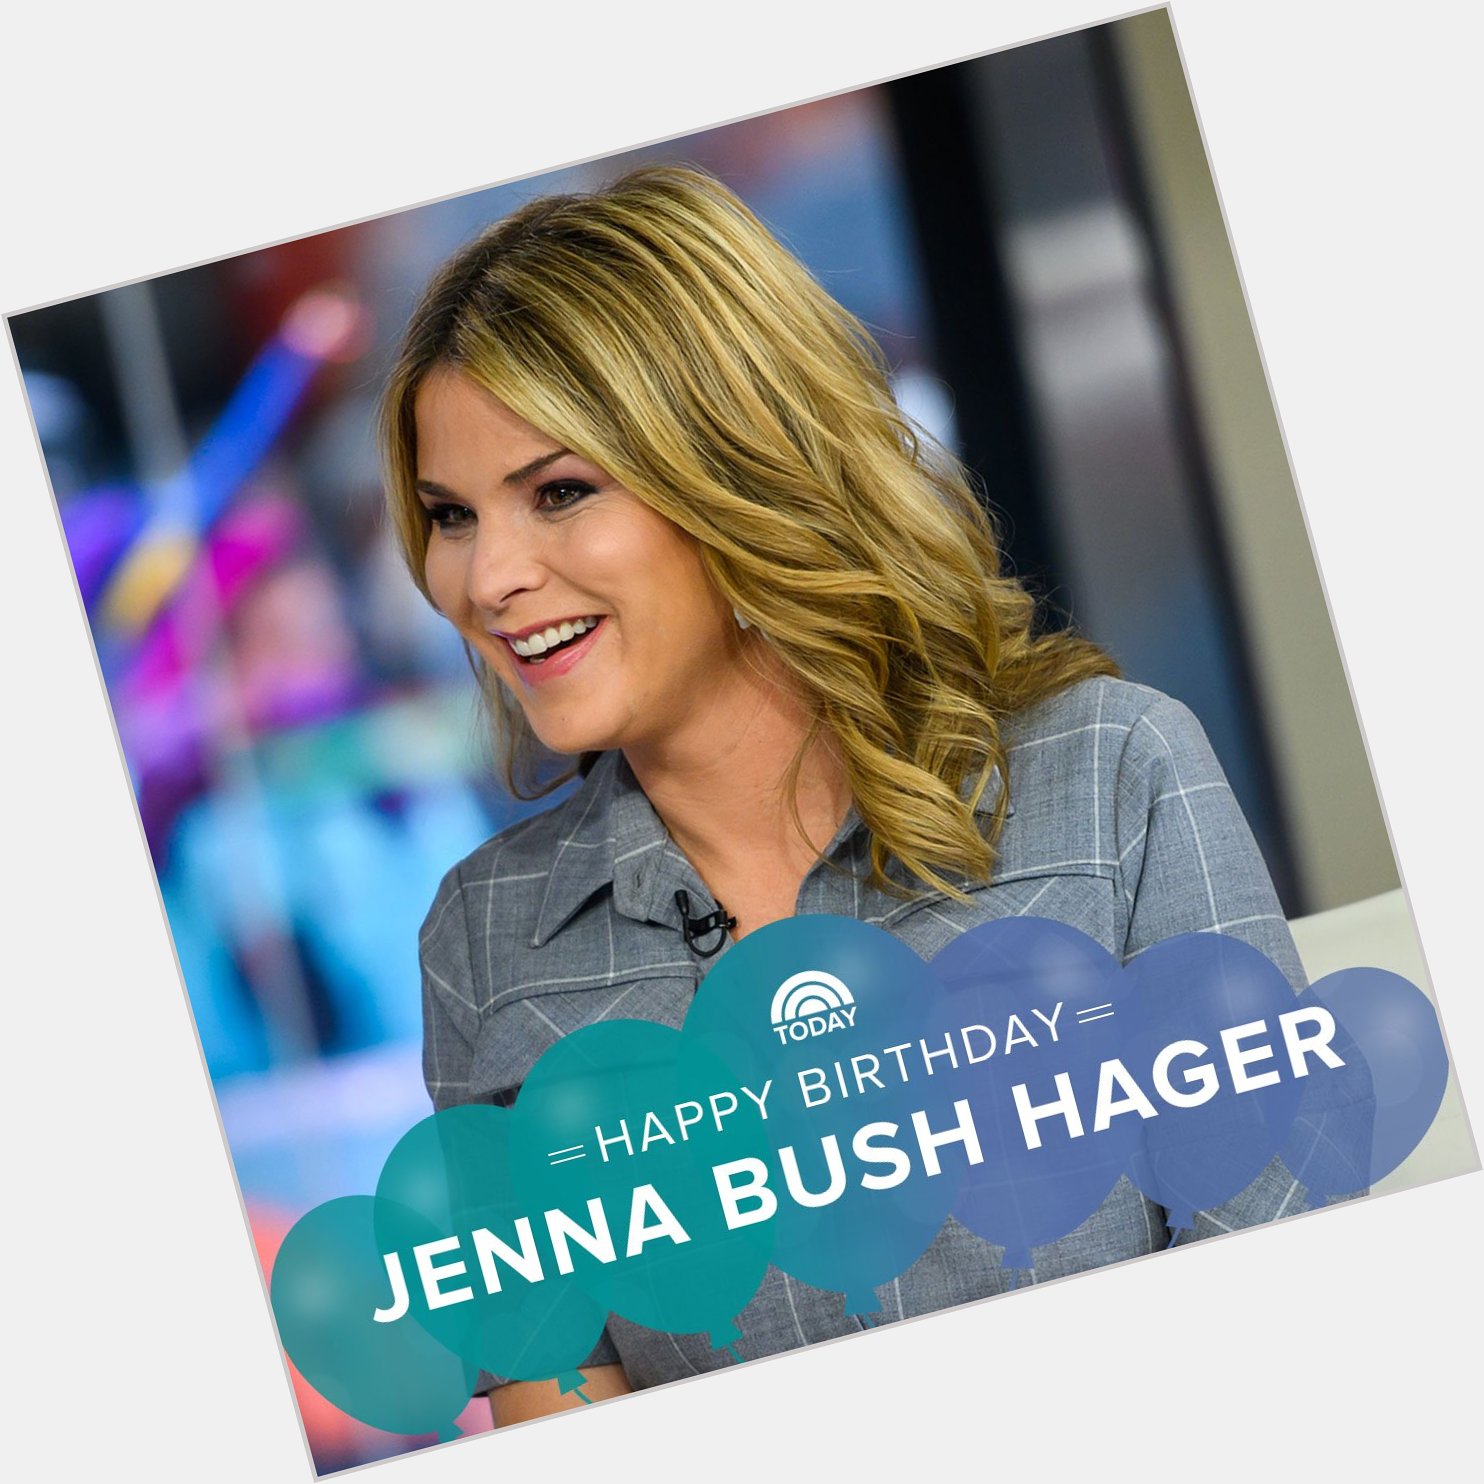 Happy birthday to our Jenna Bush Hager!  